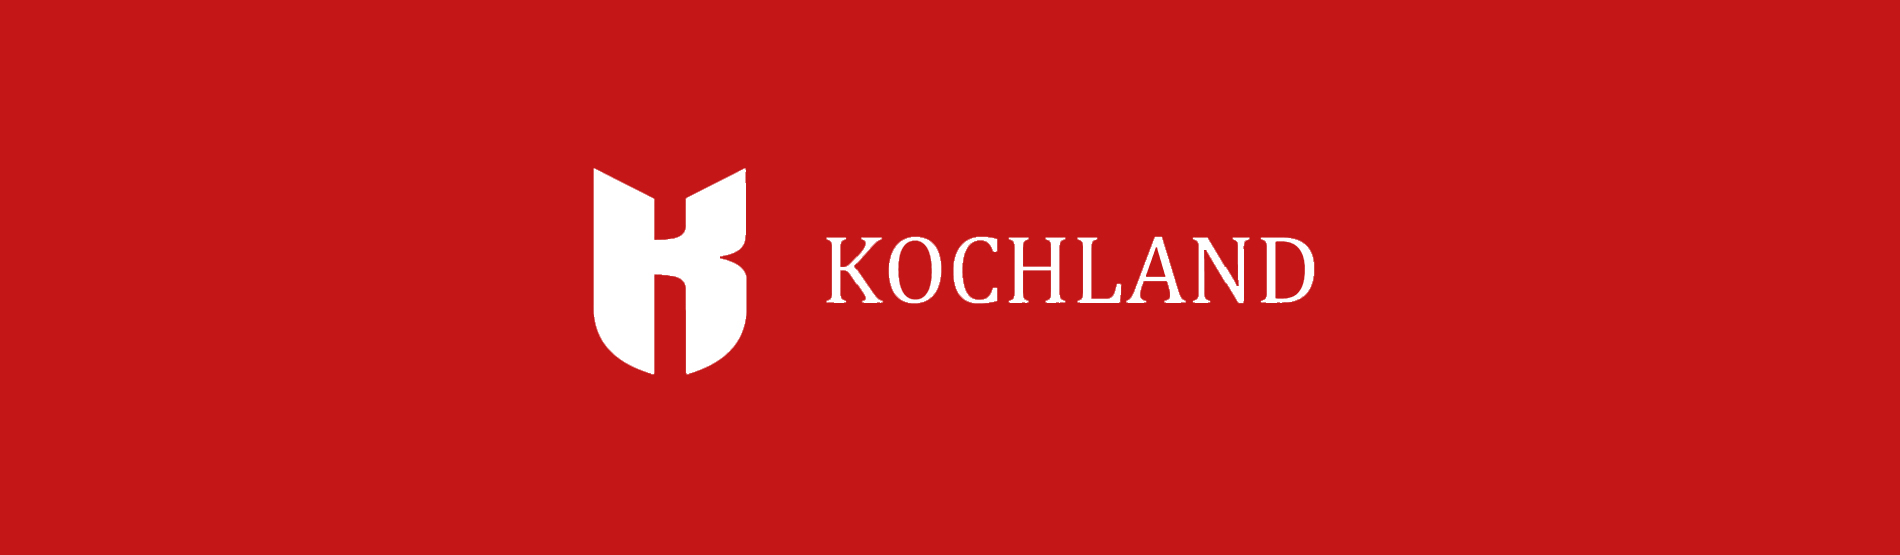 kochland-1